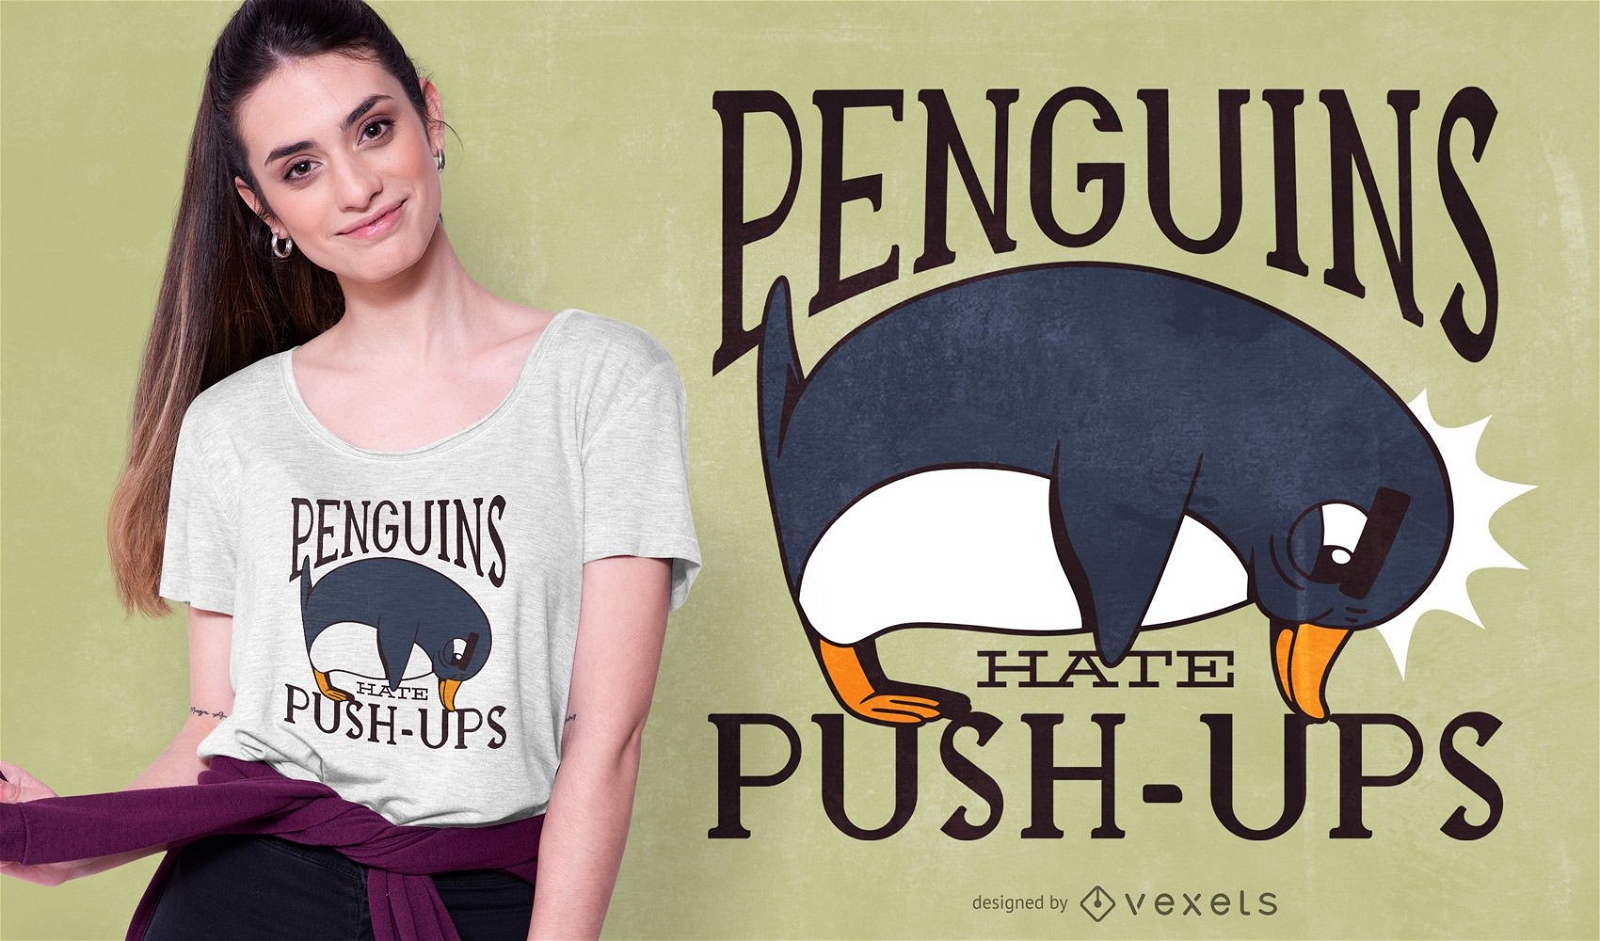 Penguin funny quote t-shirt design